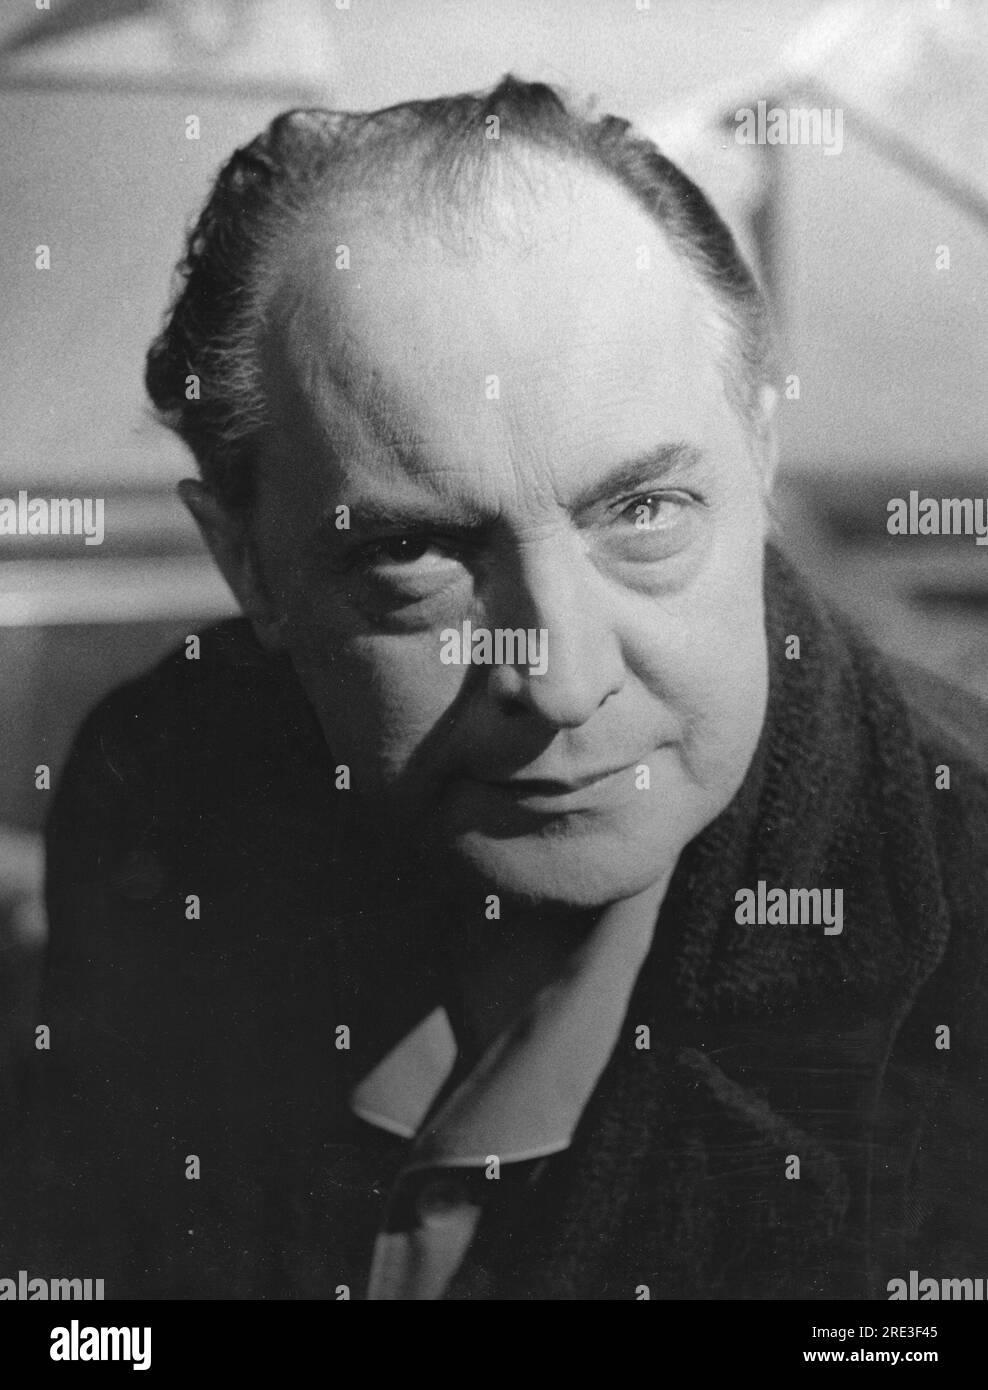 Wiesgen, Willy, 31.12.1909 - 12.12.1970, deutscher Schauspieler, 1960er, ADDITIONAL-RIGHTS-CLEARANCE-INFO-NOT-AVAILABLE Stockfoto